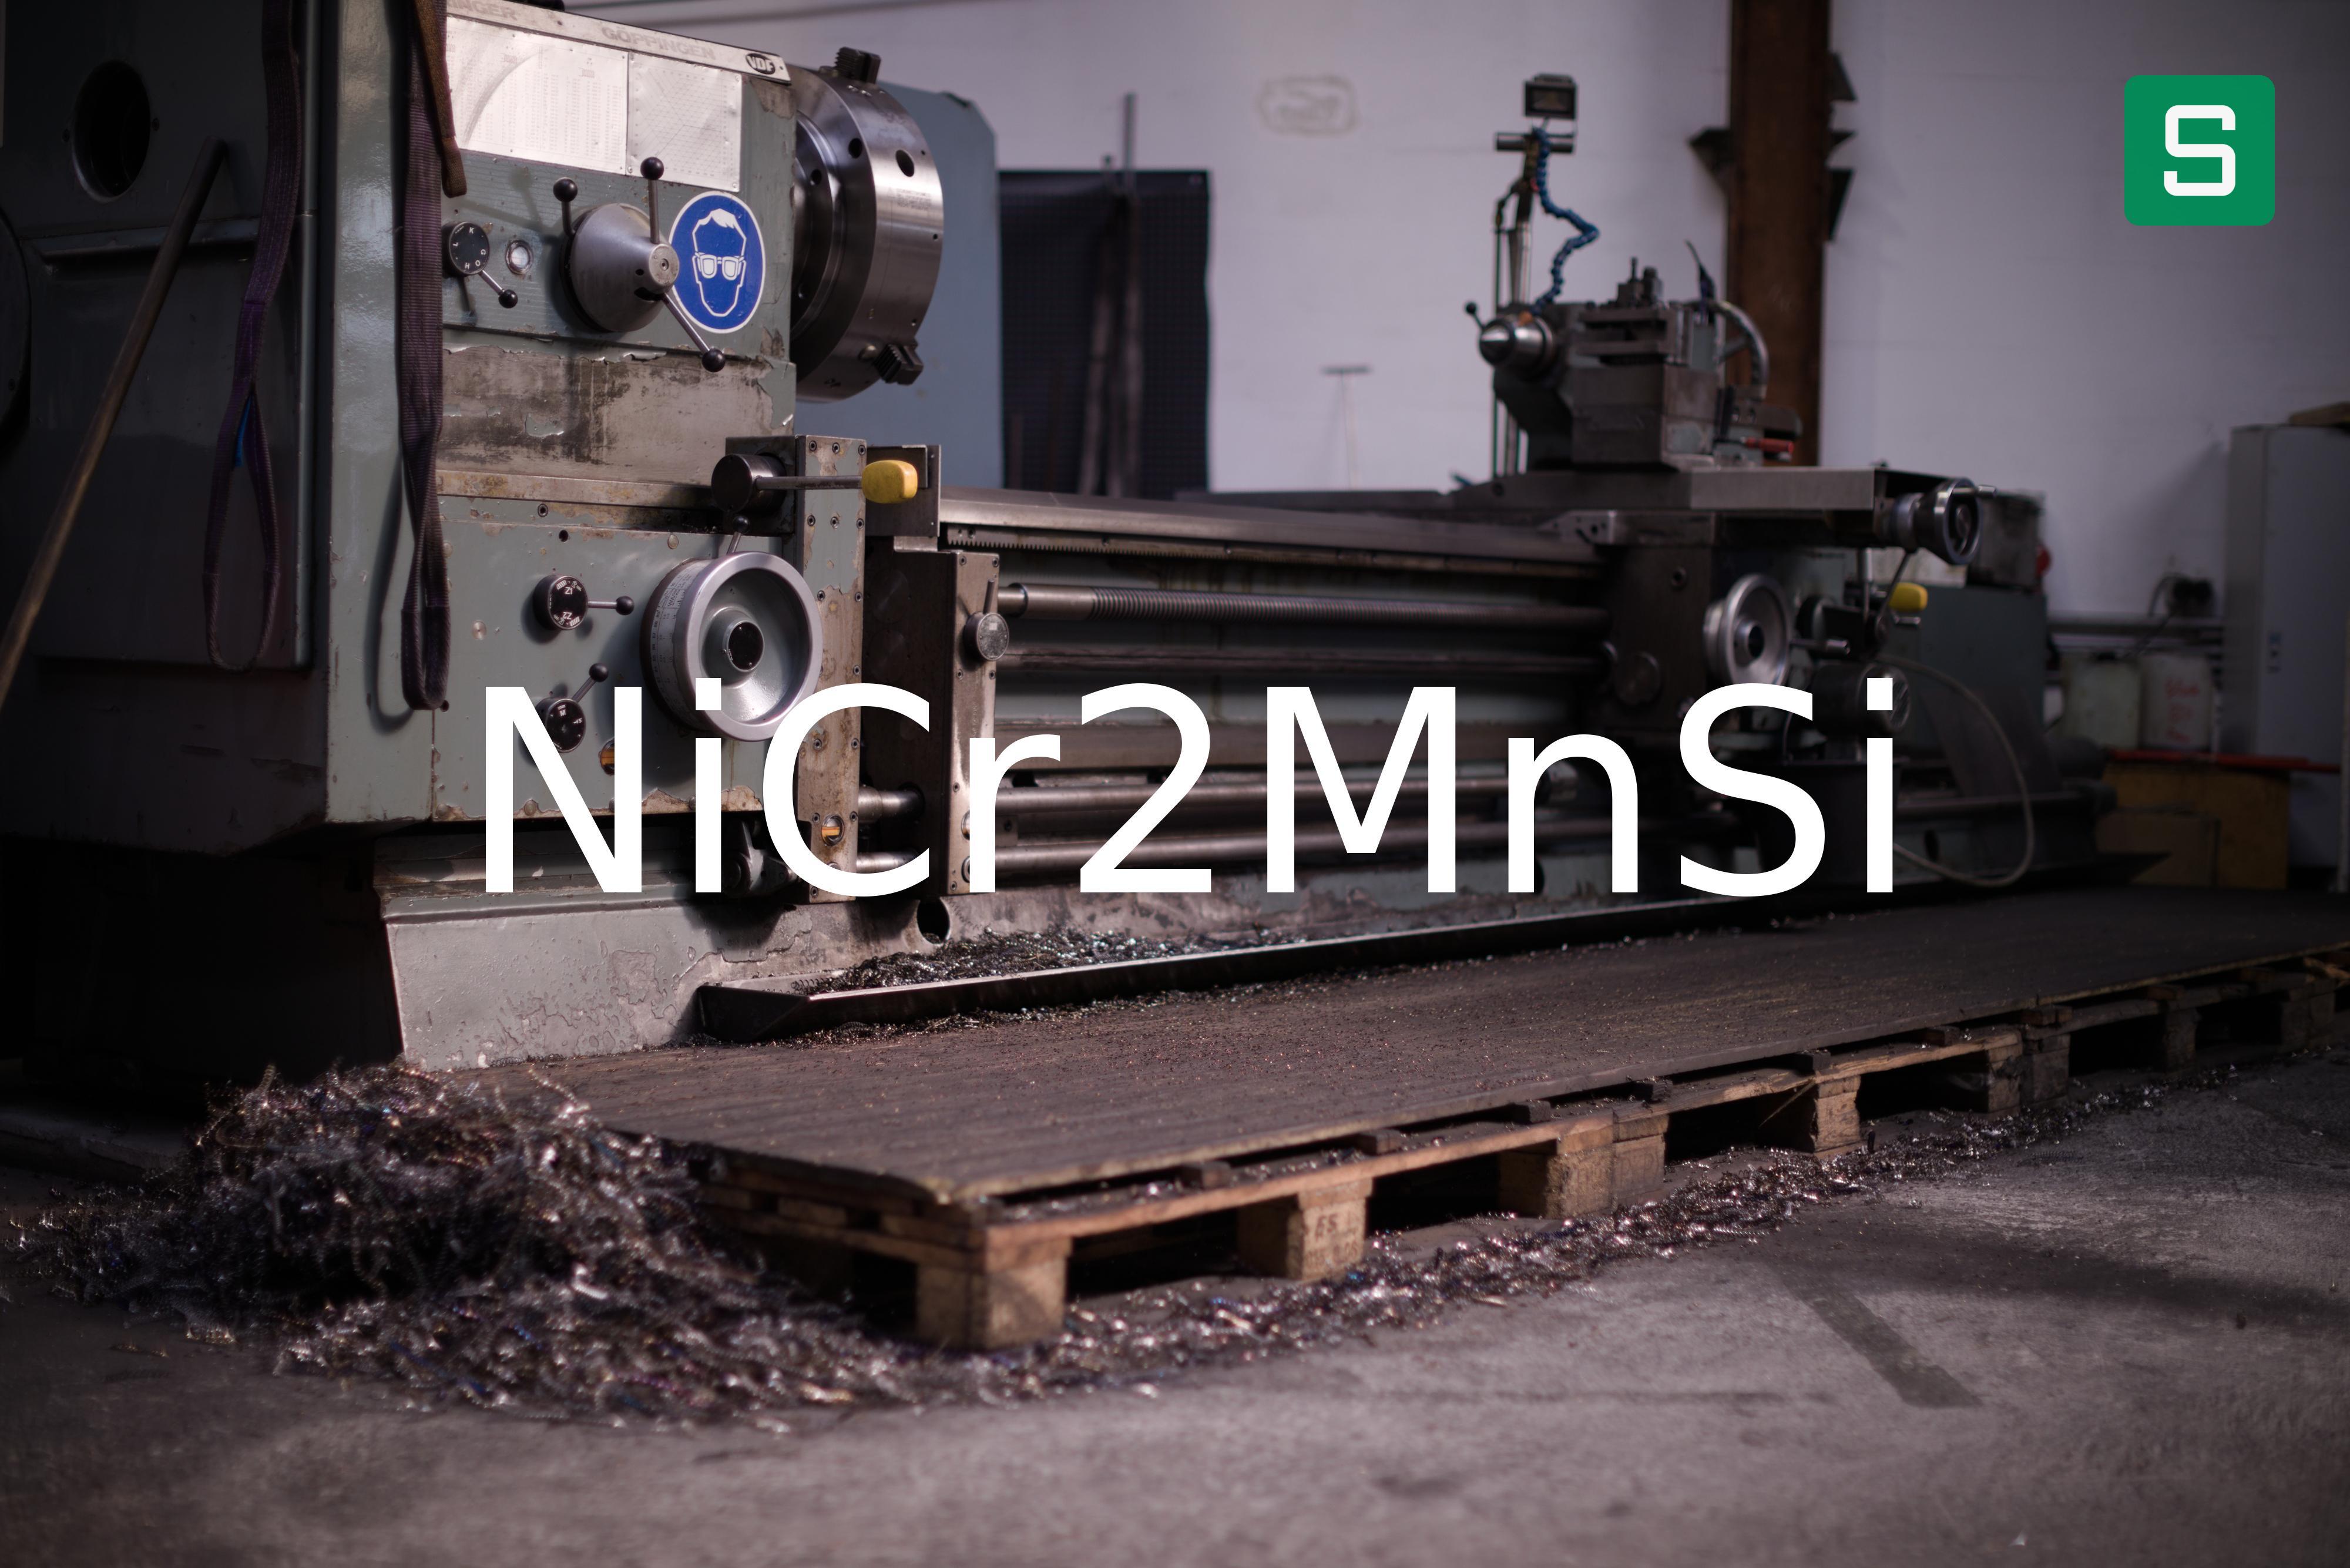 Steel Material: NiCr2MnSi